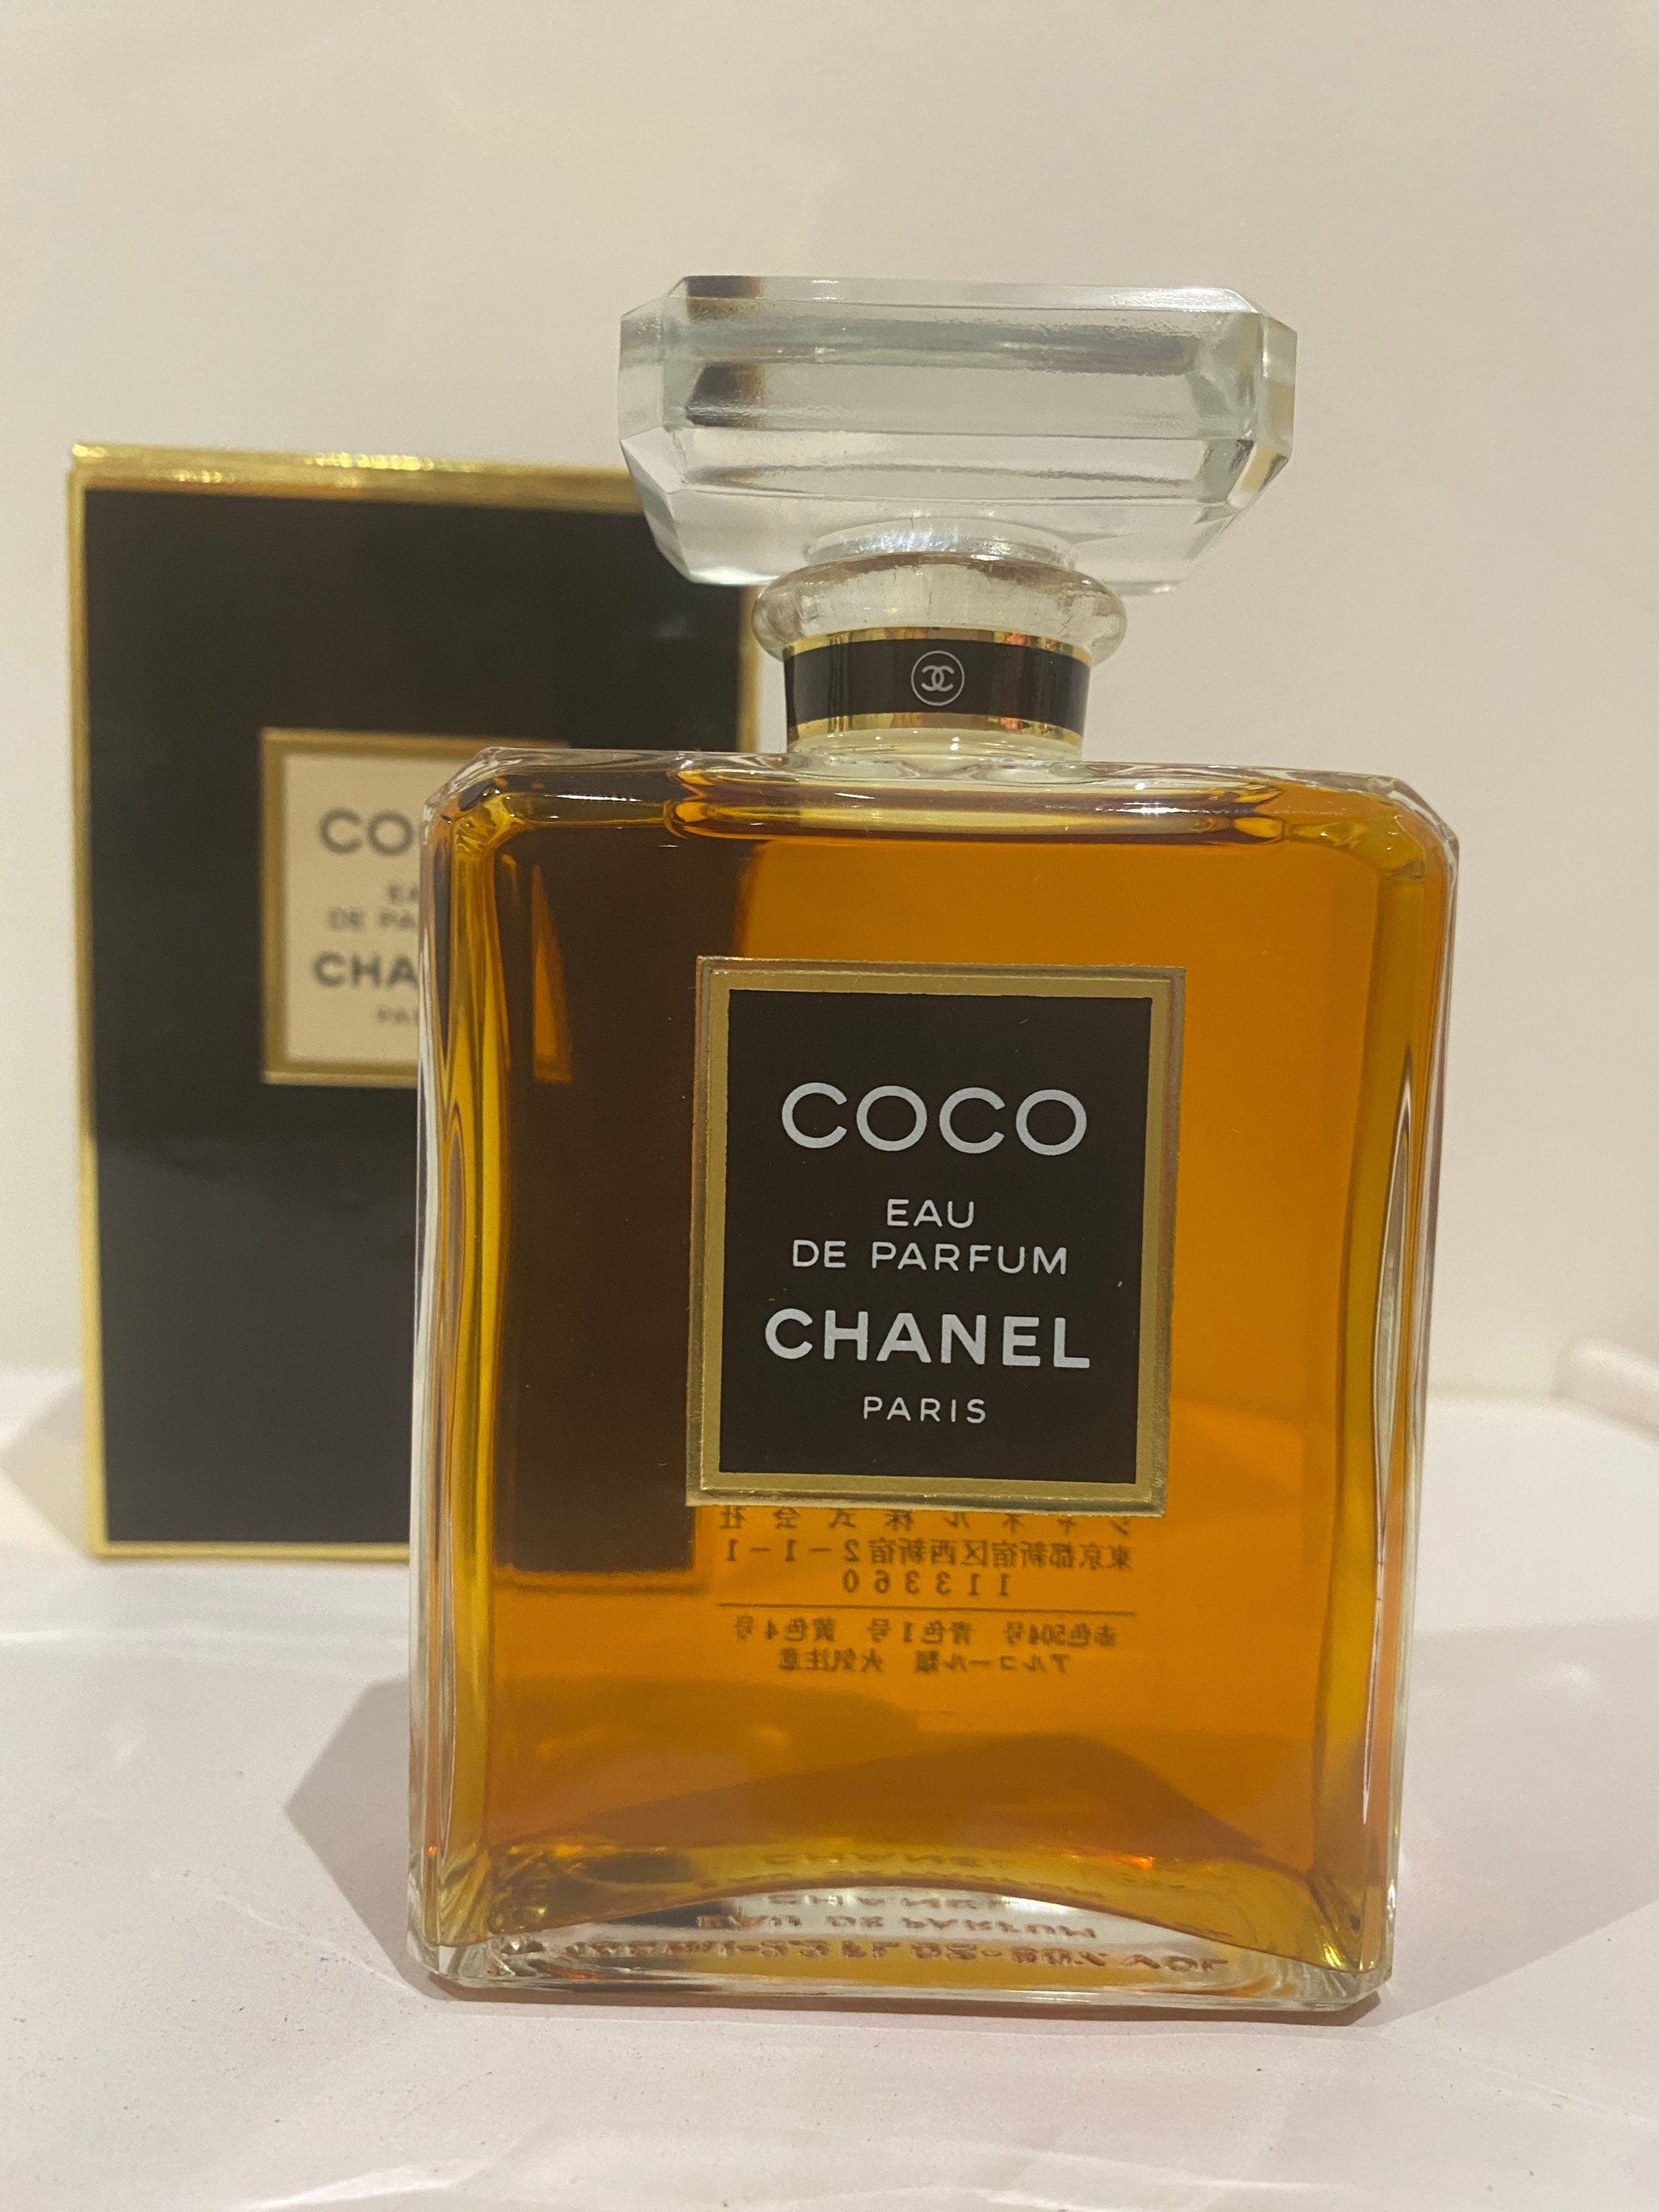 Coco parfum Chanel edp 100 ml. Vintage 1984. Sealed bottle